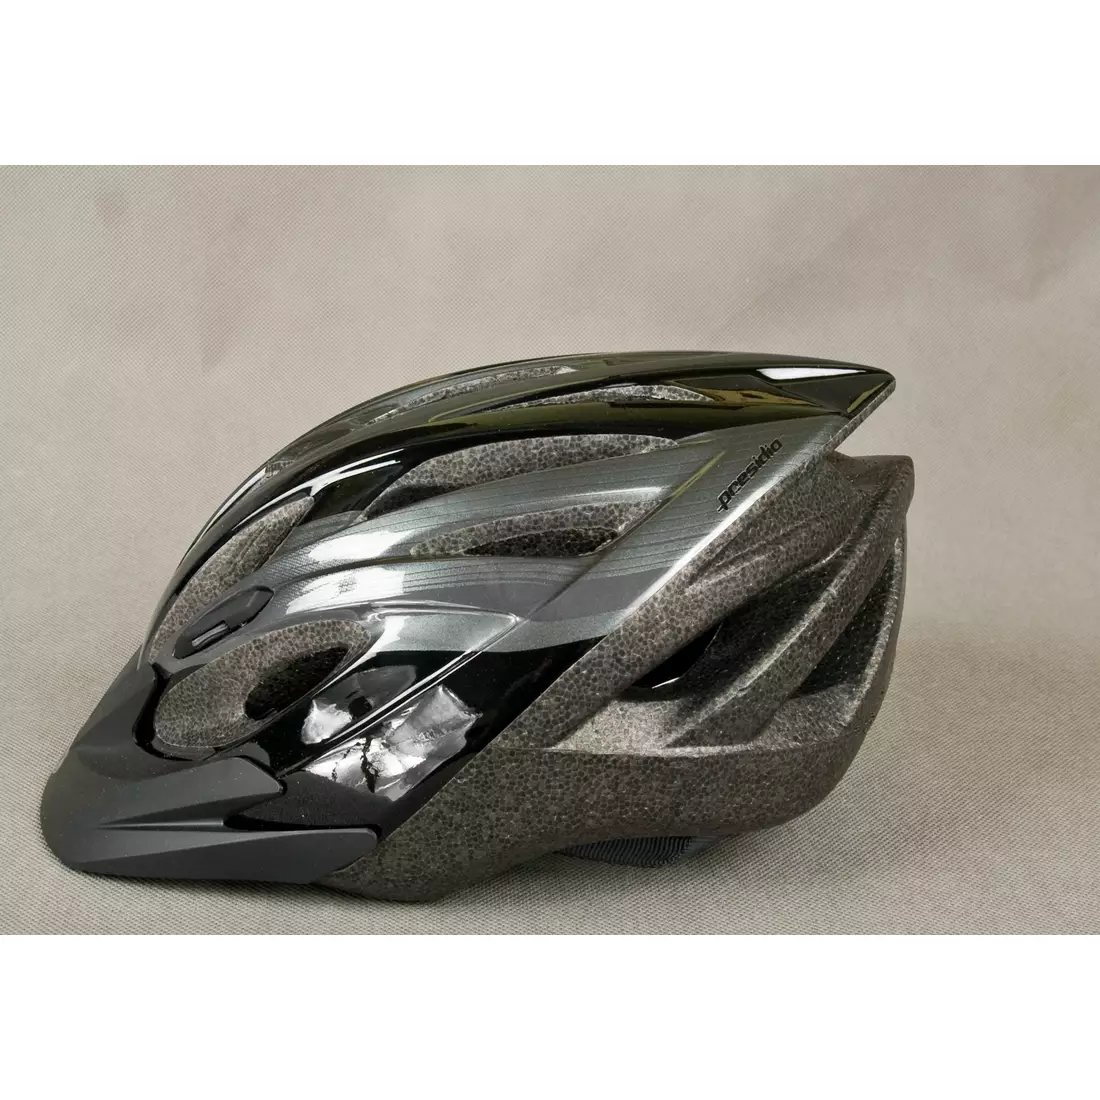 BELL PRESIDIO - cyklistická přilba, barva: Černá a titanová